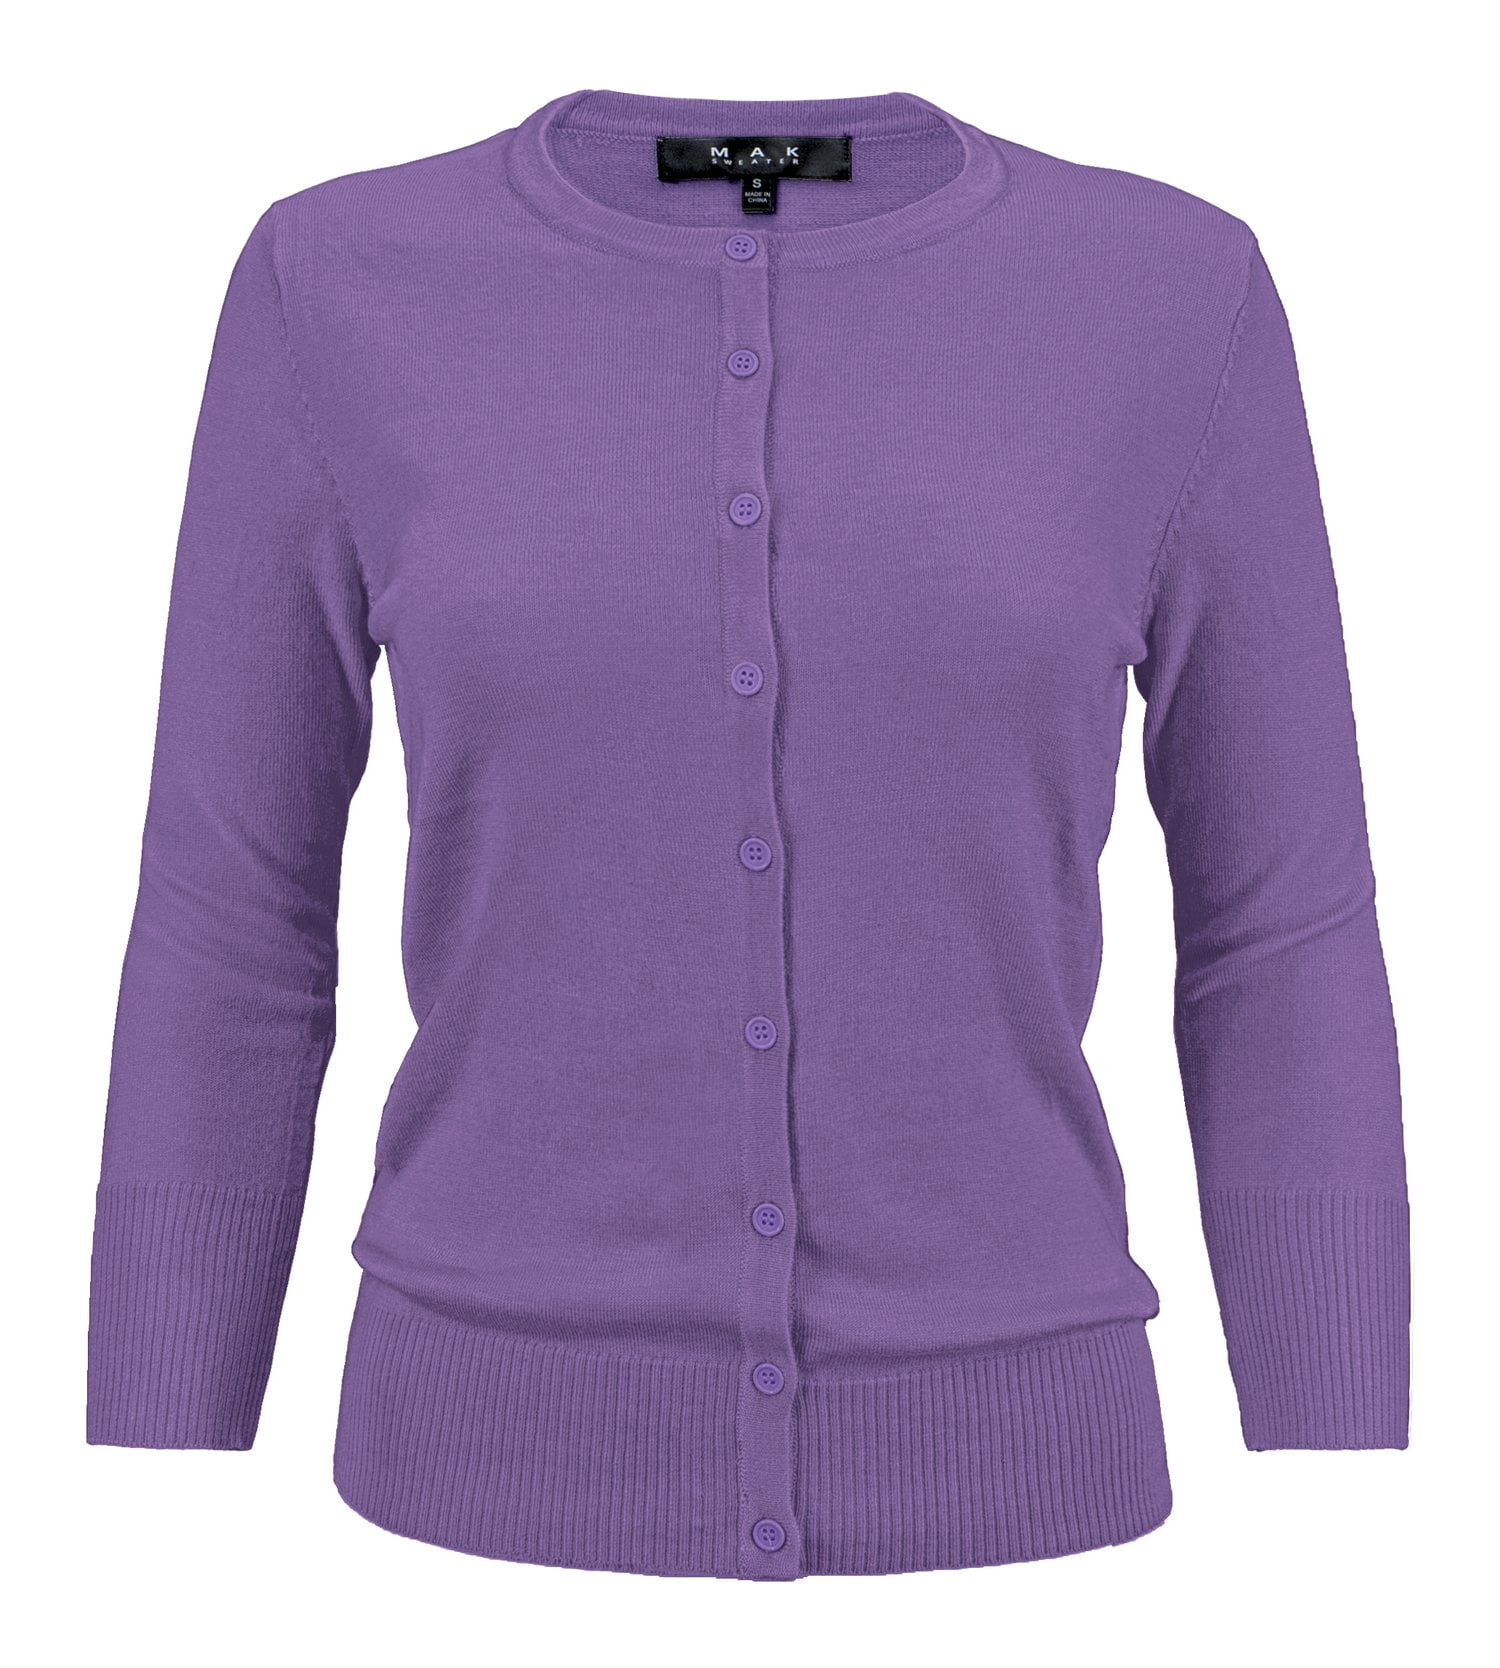 YEMAK Women's Knit Cardigan Sweater – 3/4 Sleeve Crewneck Basic Classic ...